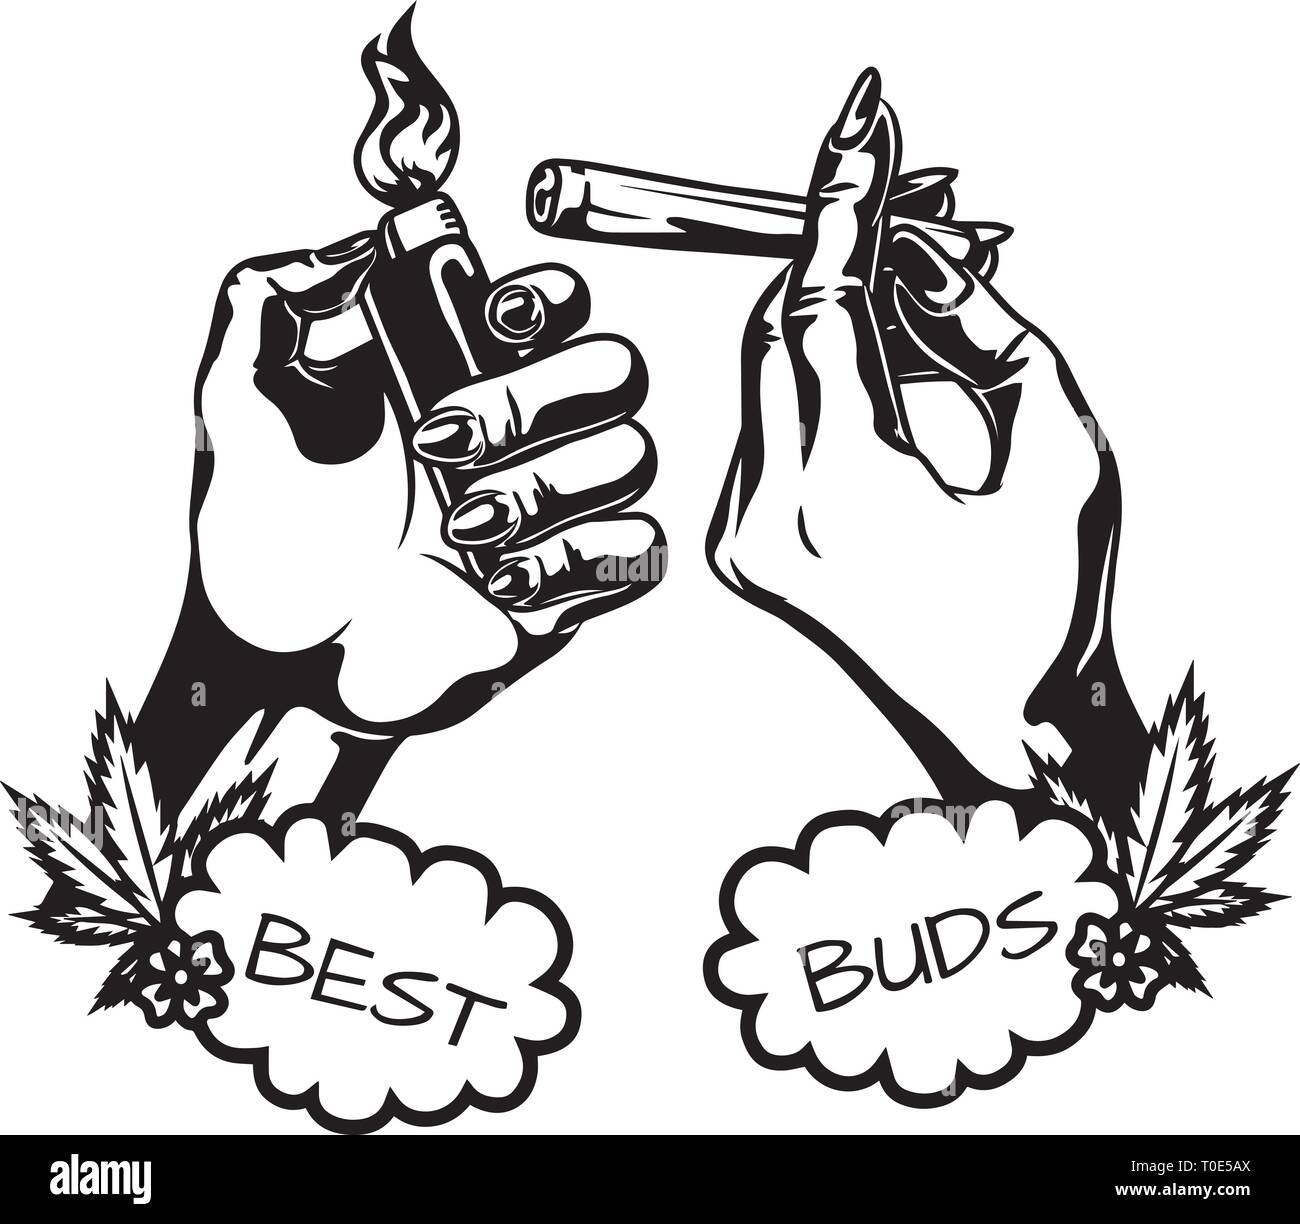 Blunt Weed Cannabis Medical Marijuana Pot Stone High Life Smoker Drug ...